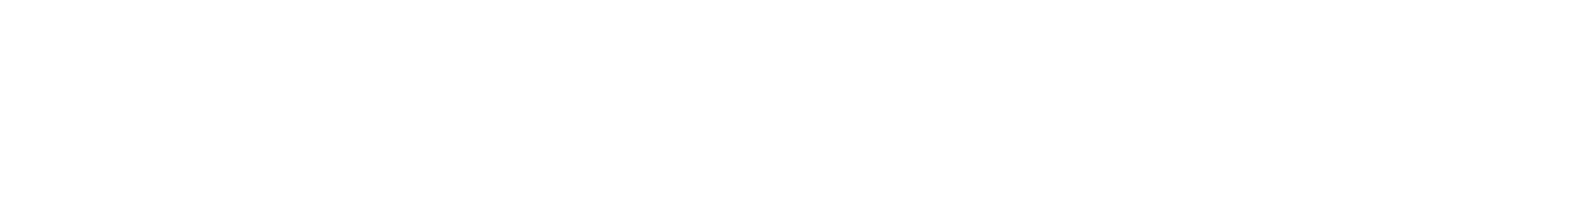 Carlyle Group logo grand pour les fonds sombres (PNG transparent)